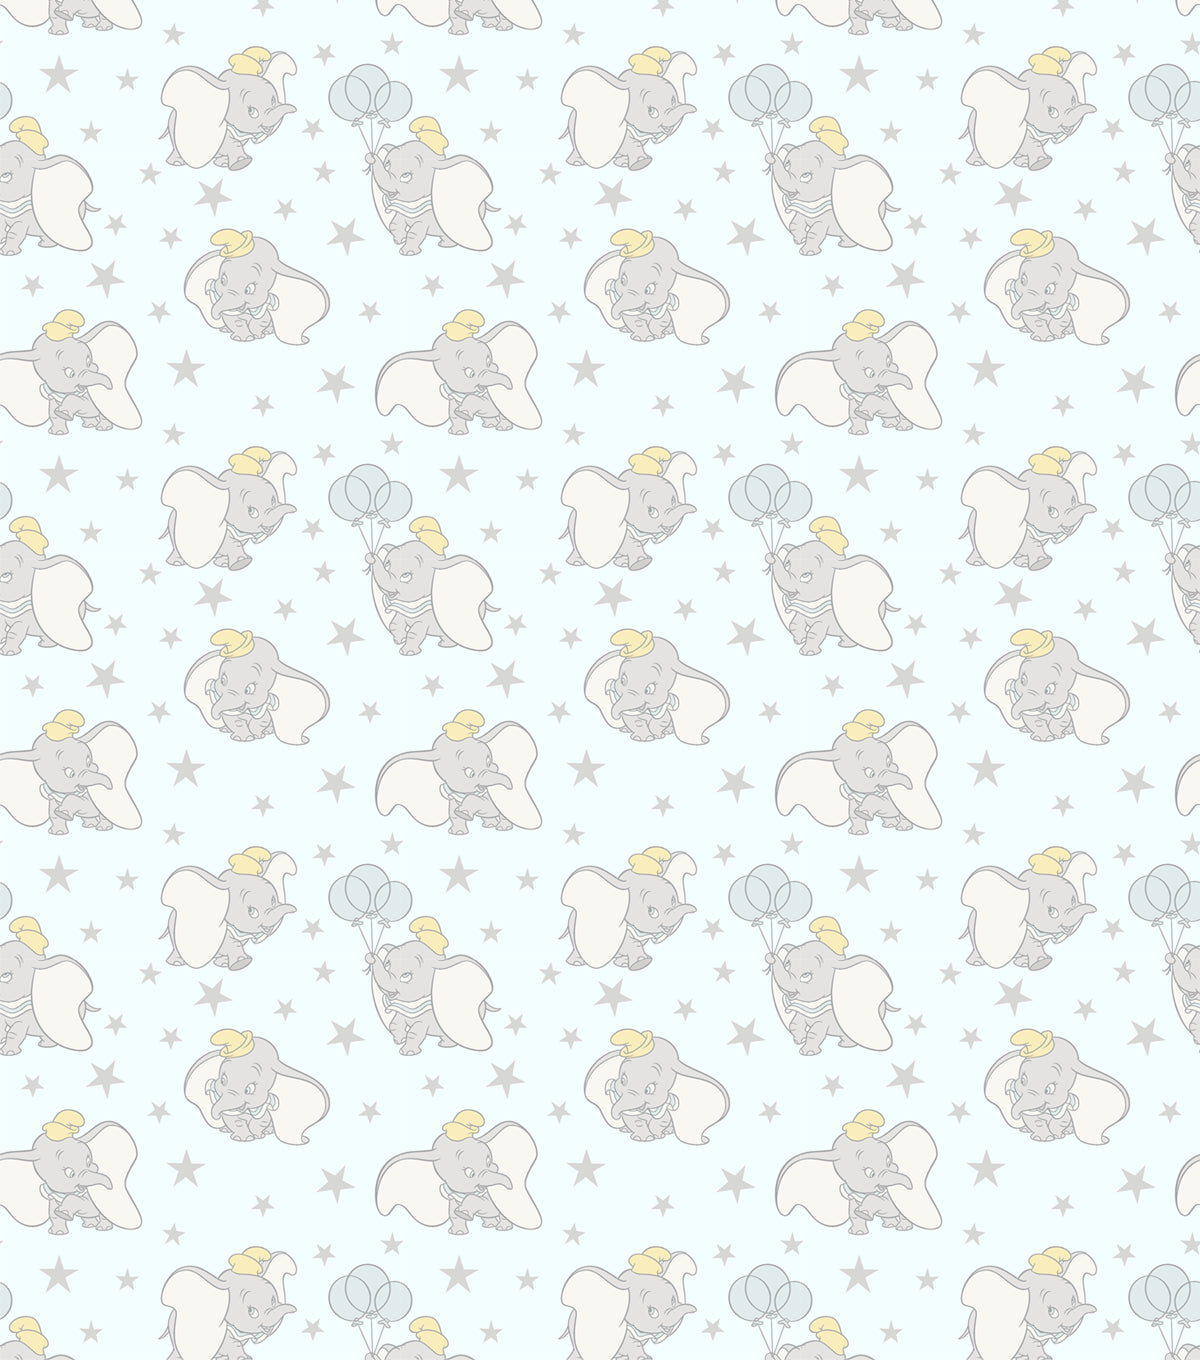 Disney Dumbo Stars Cotton Fabric